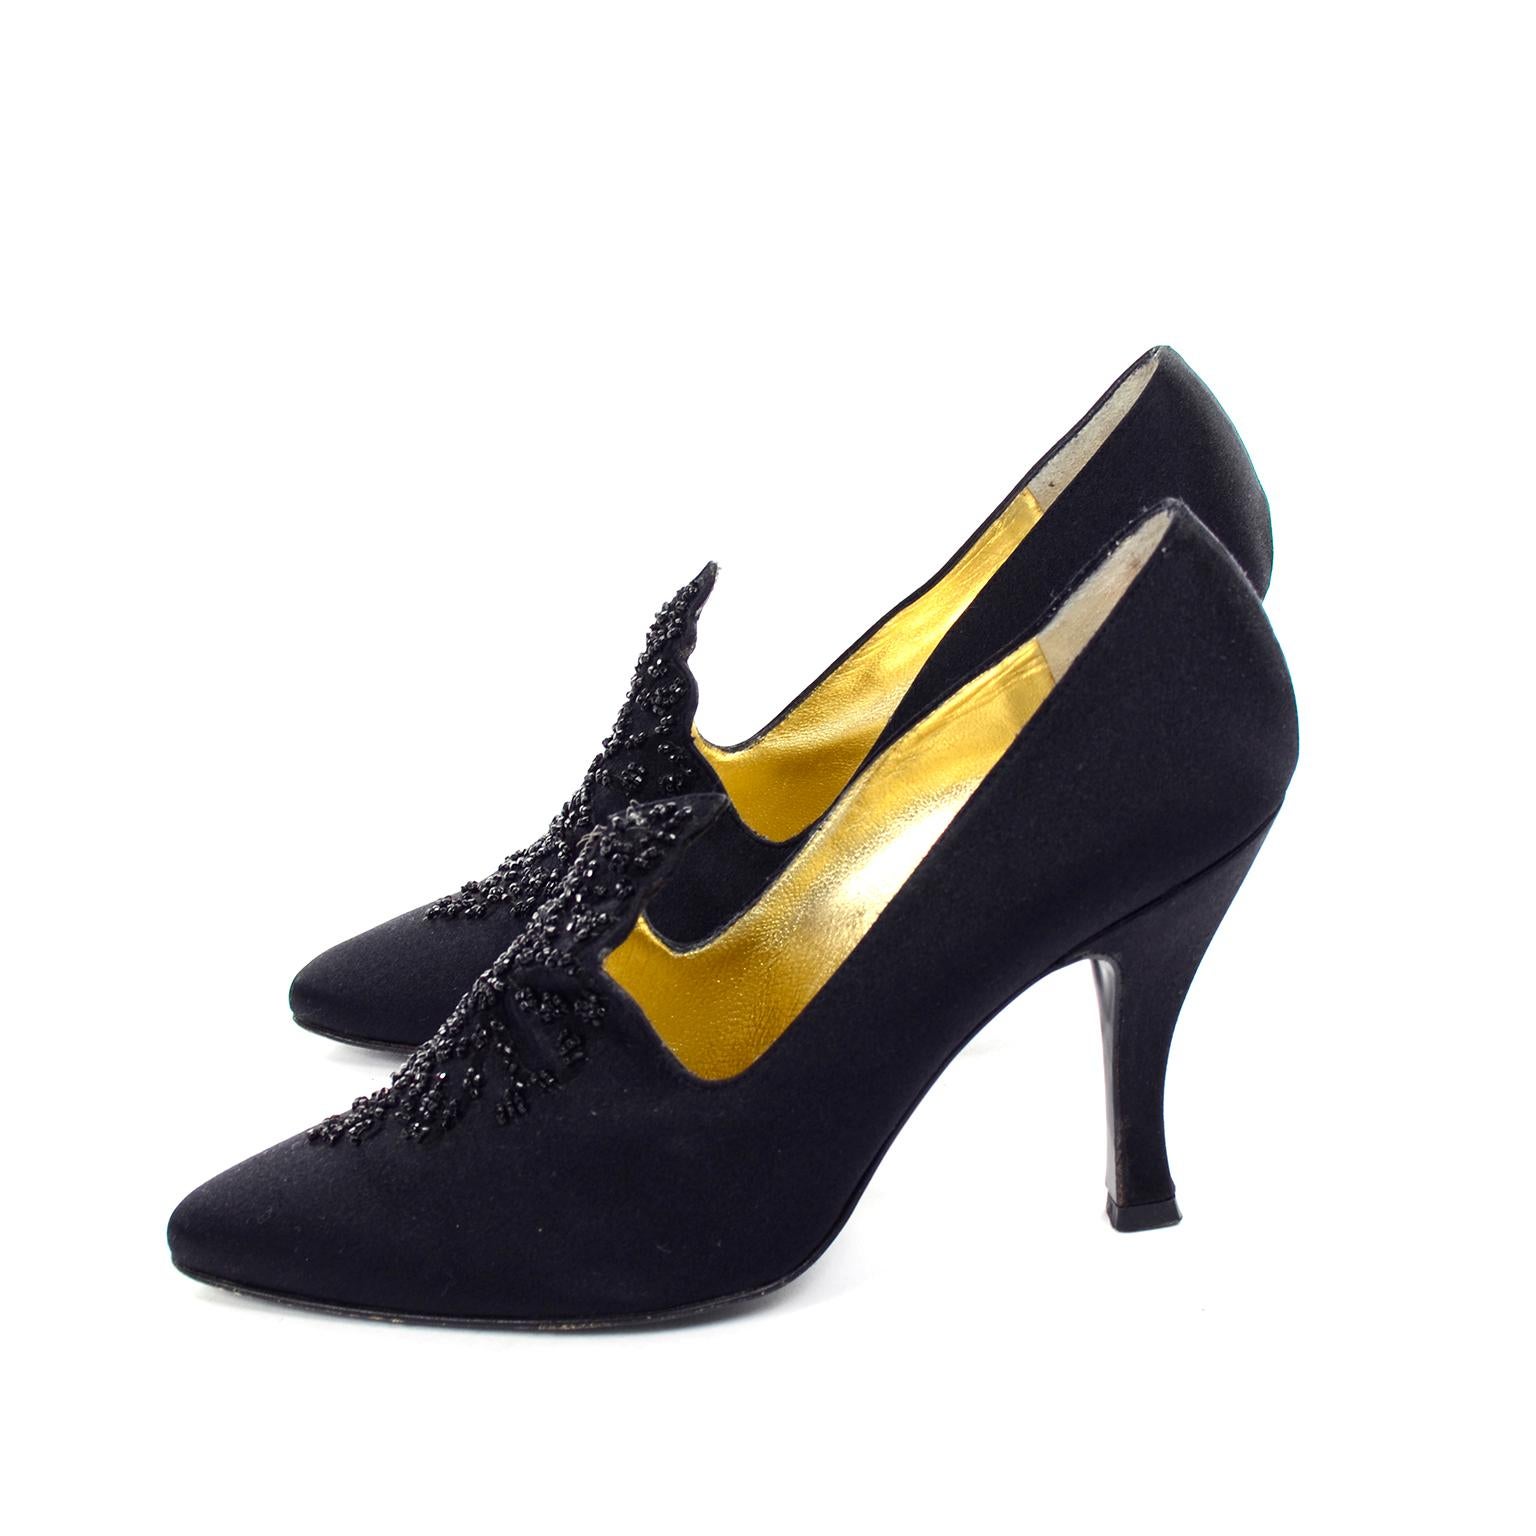 vintage dior heels size 8